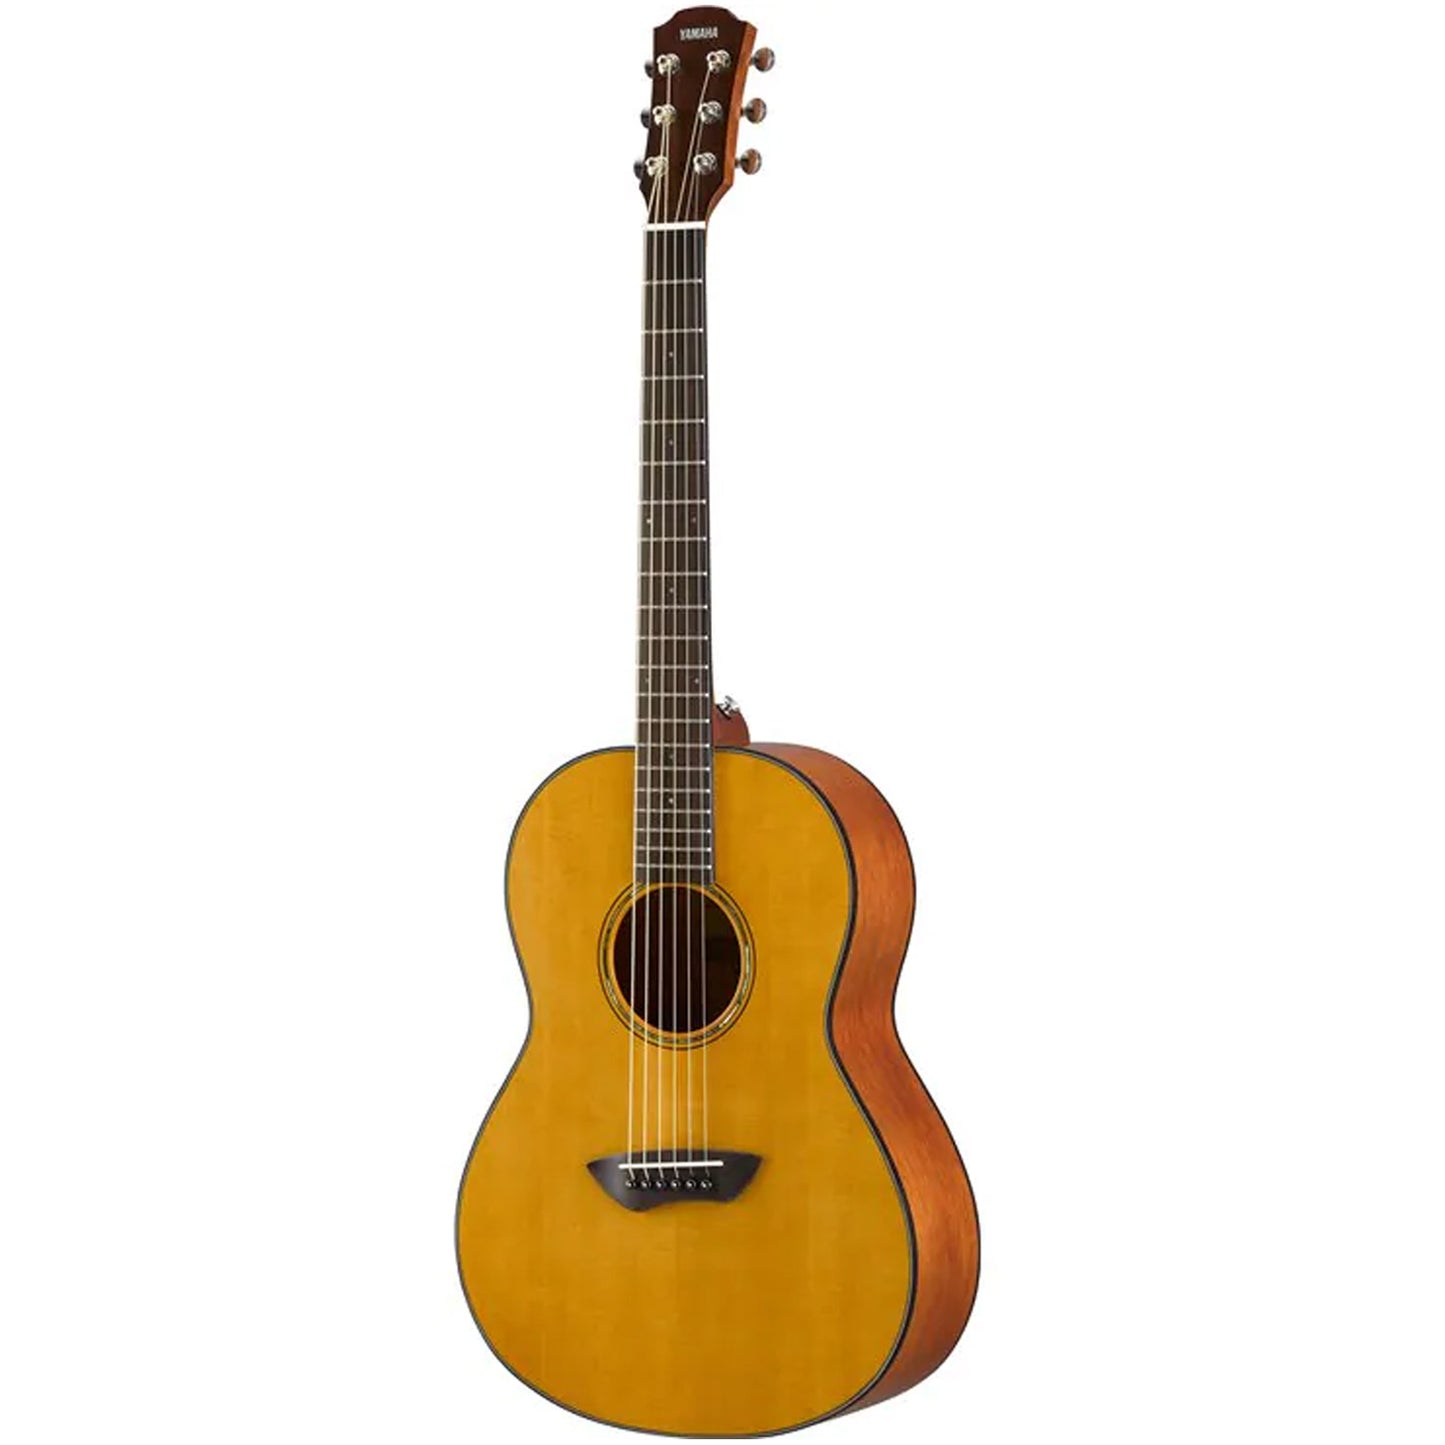 Yamaha CSF1M Vintage Natural Parlor Guitar, Mahogany Back and Sides, Solid Spruce Top